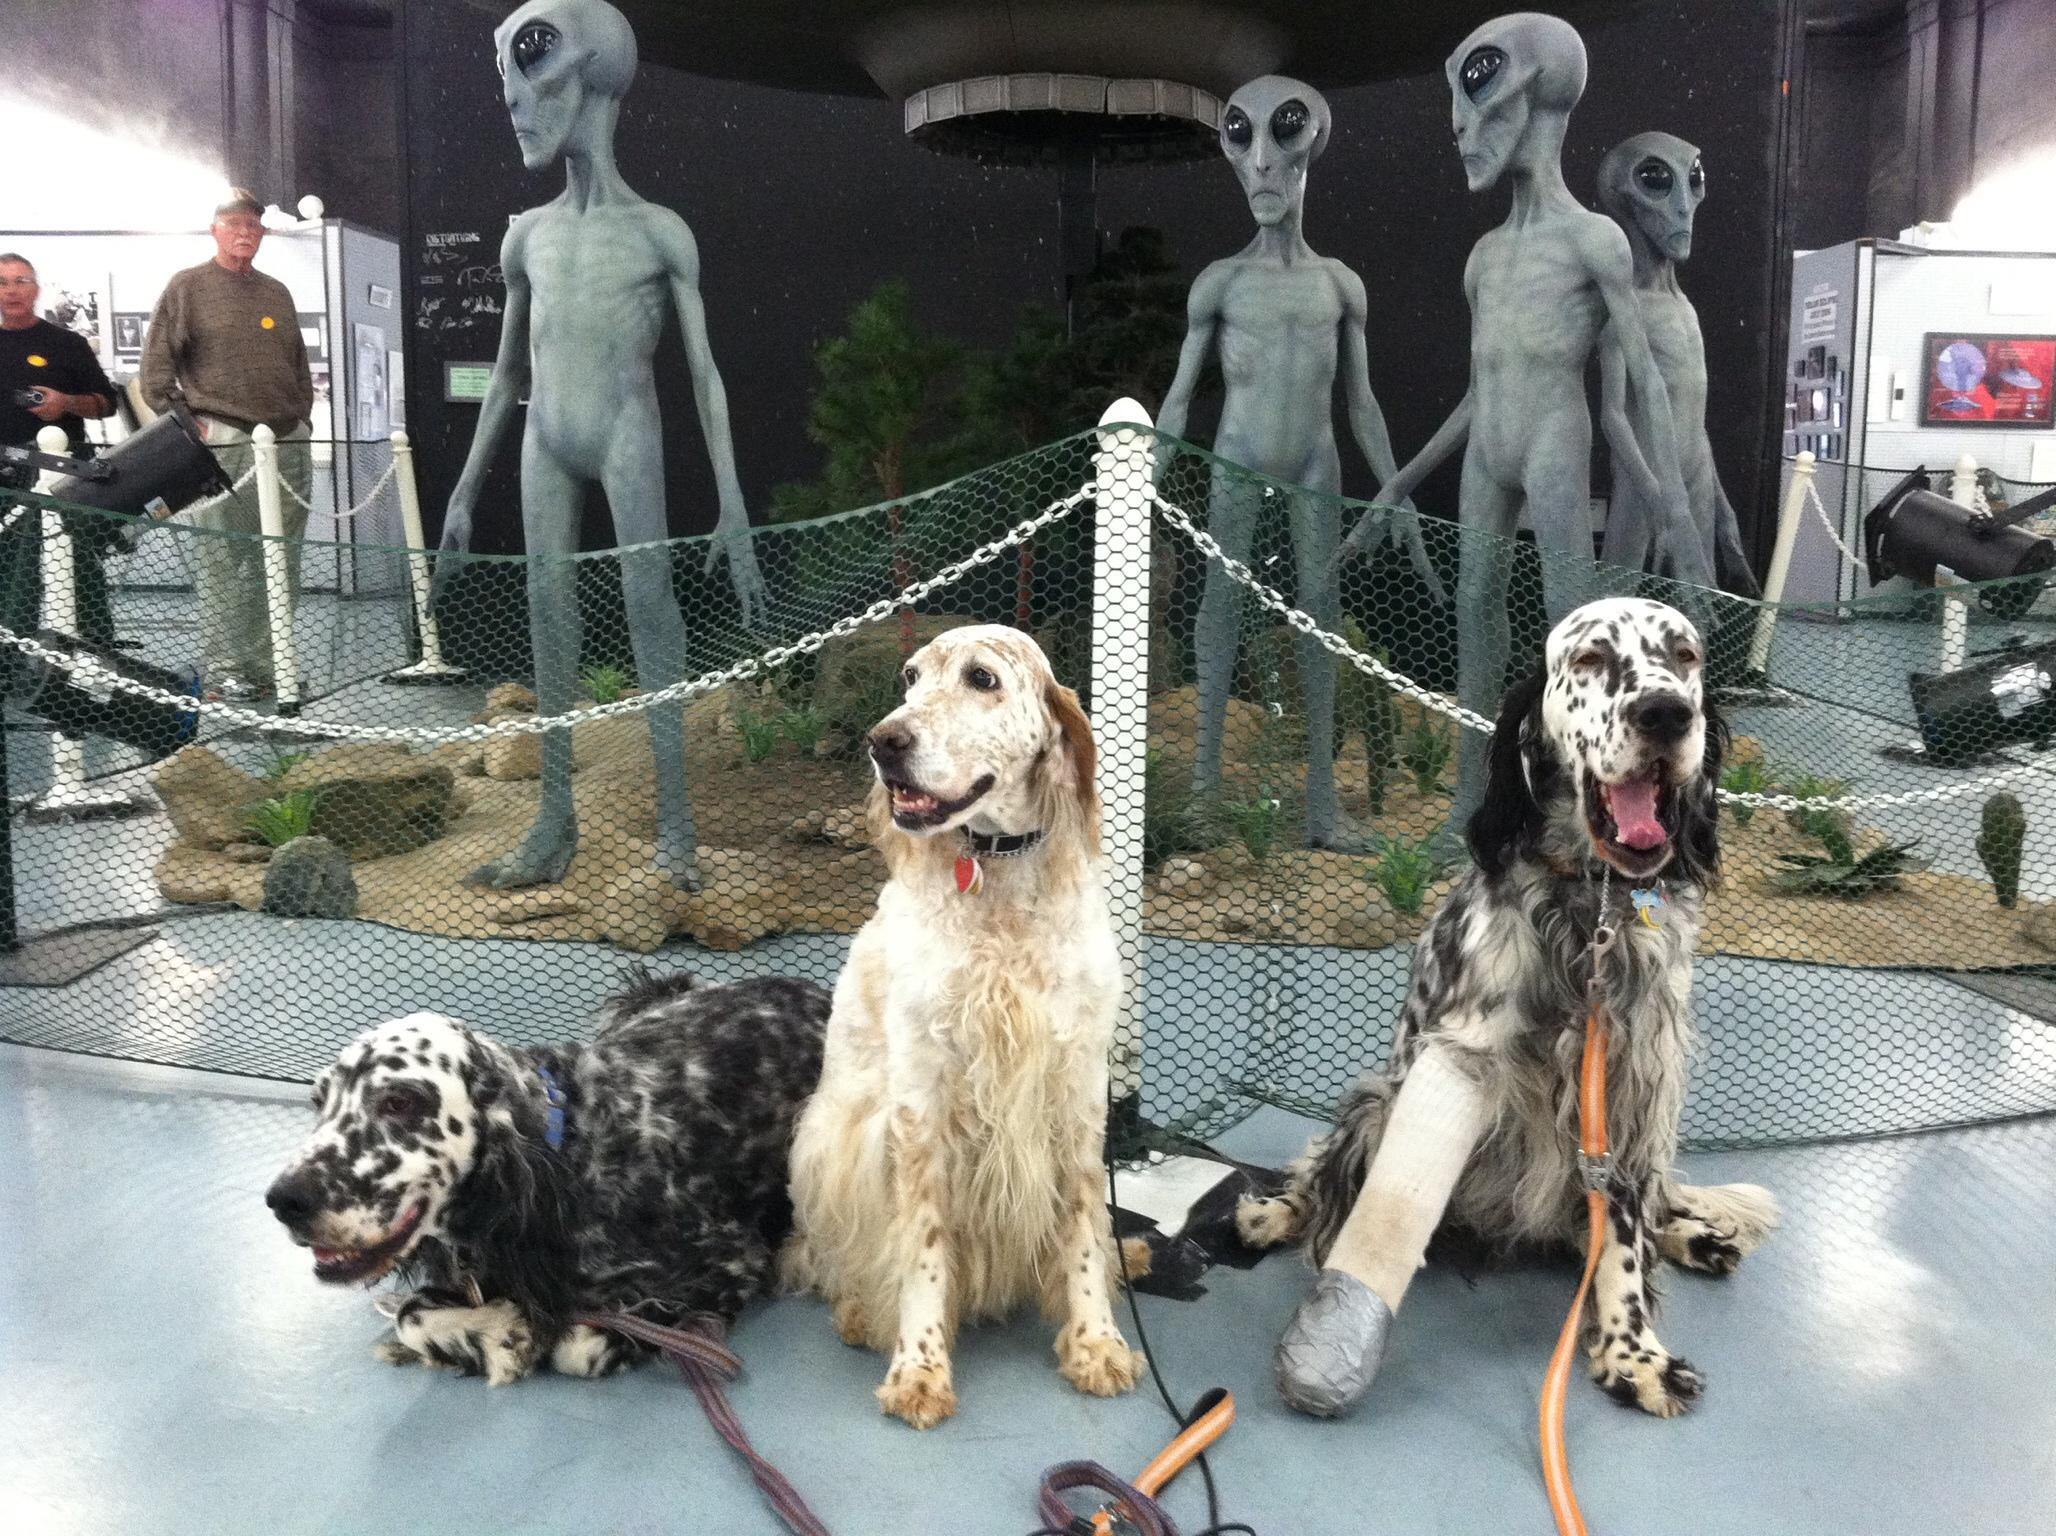 Pet Friendly International UFO Museum & Research Center